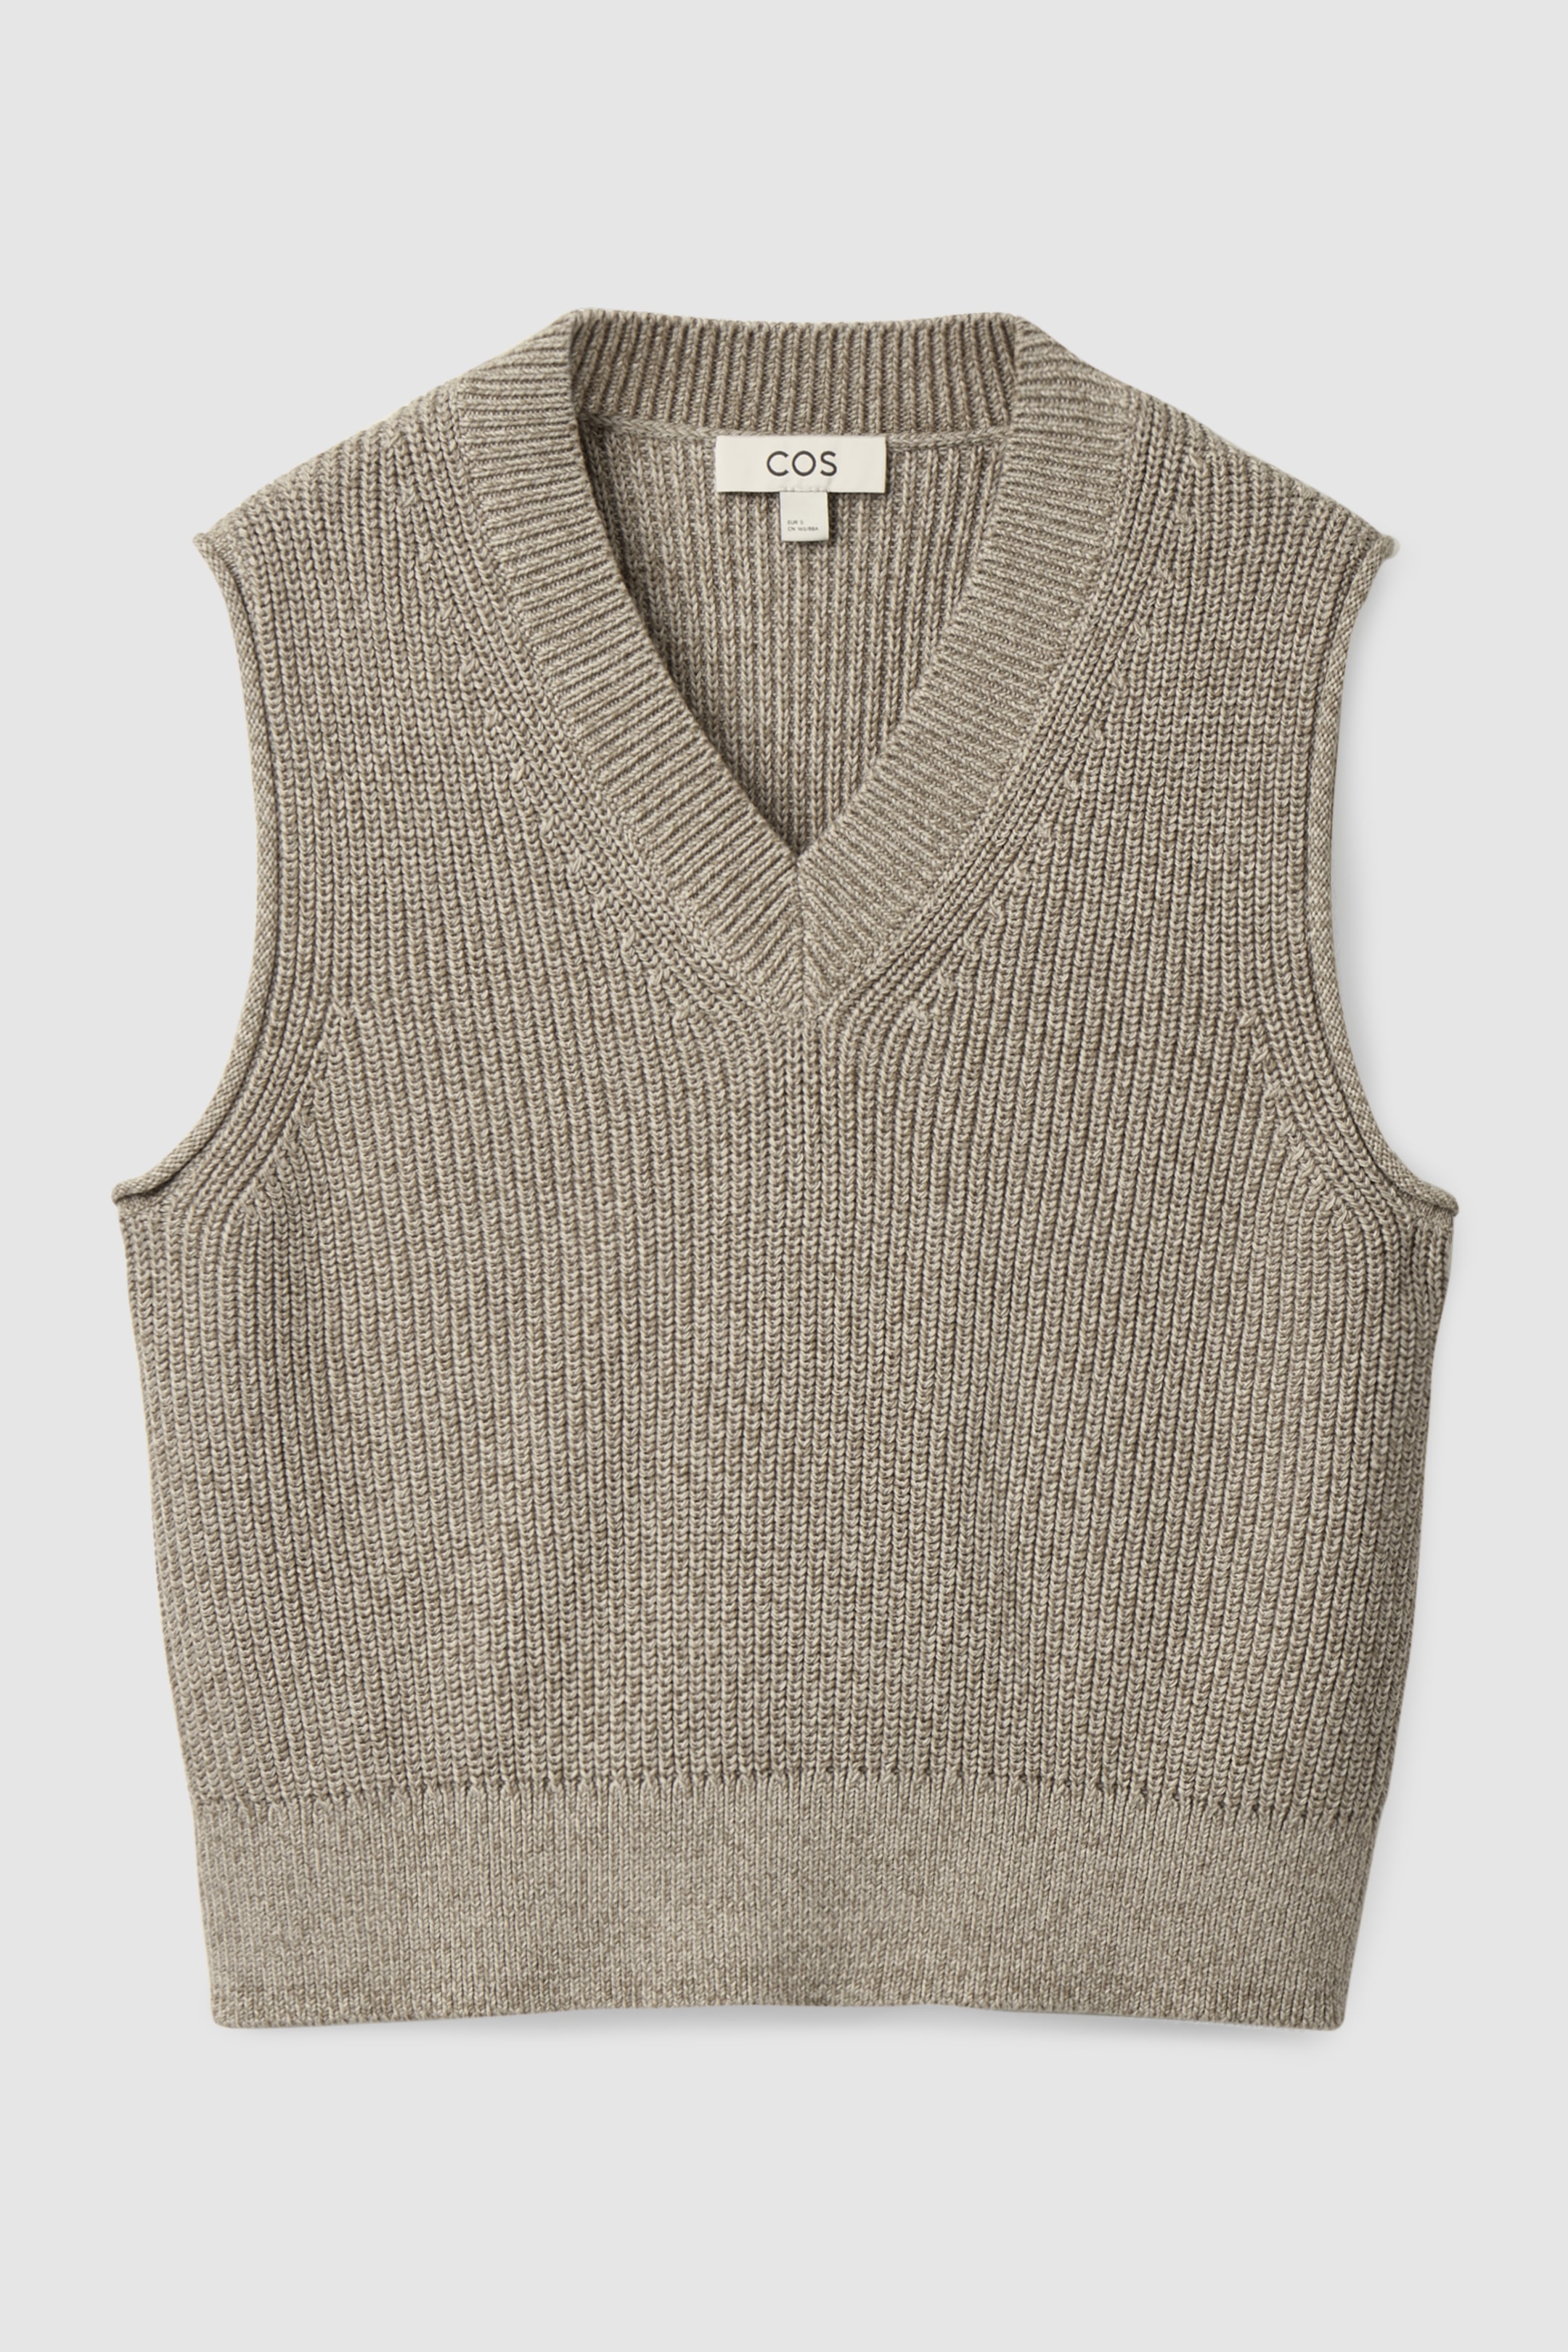 Bershka chunky knit sweater vest in chocolate brown  ASOS